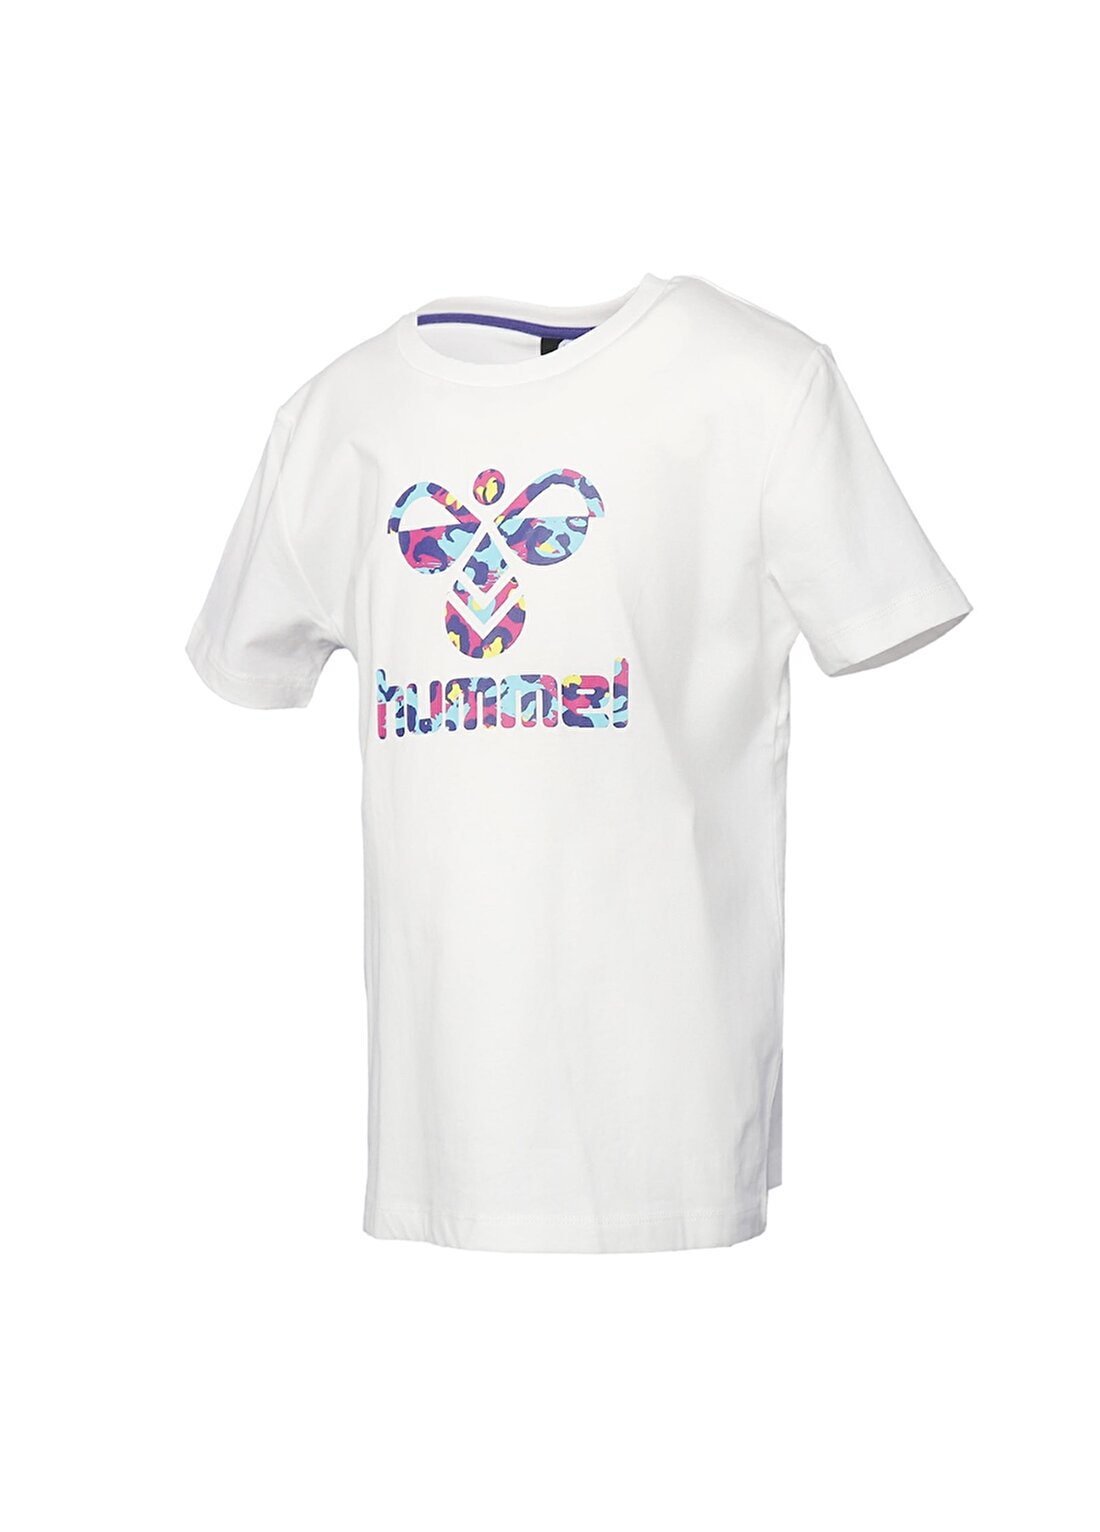 Hummel ALNON T-SHIRT S/S Beyaz Kız Çocuk T-Shirt 911465-9003